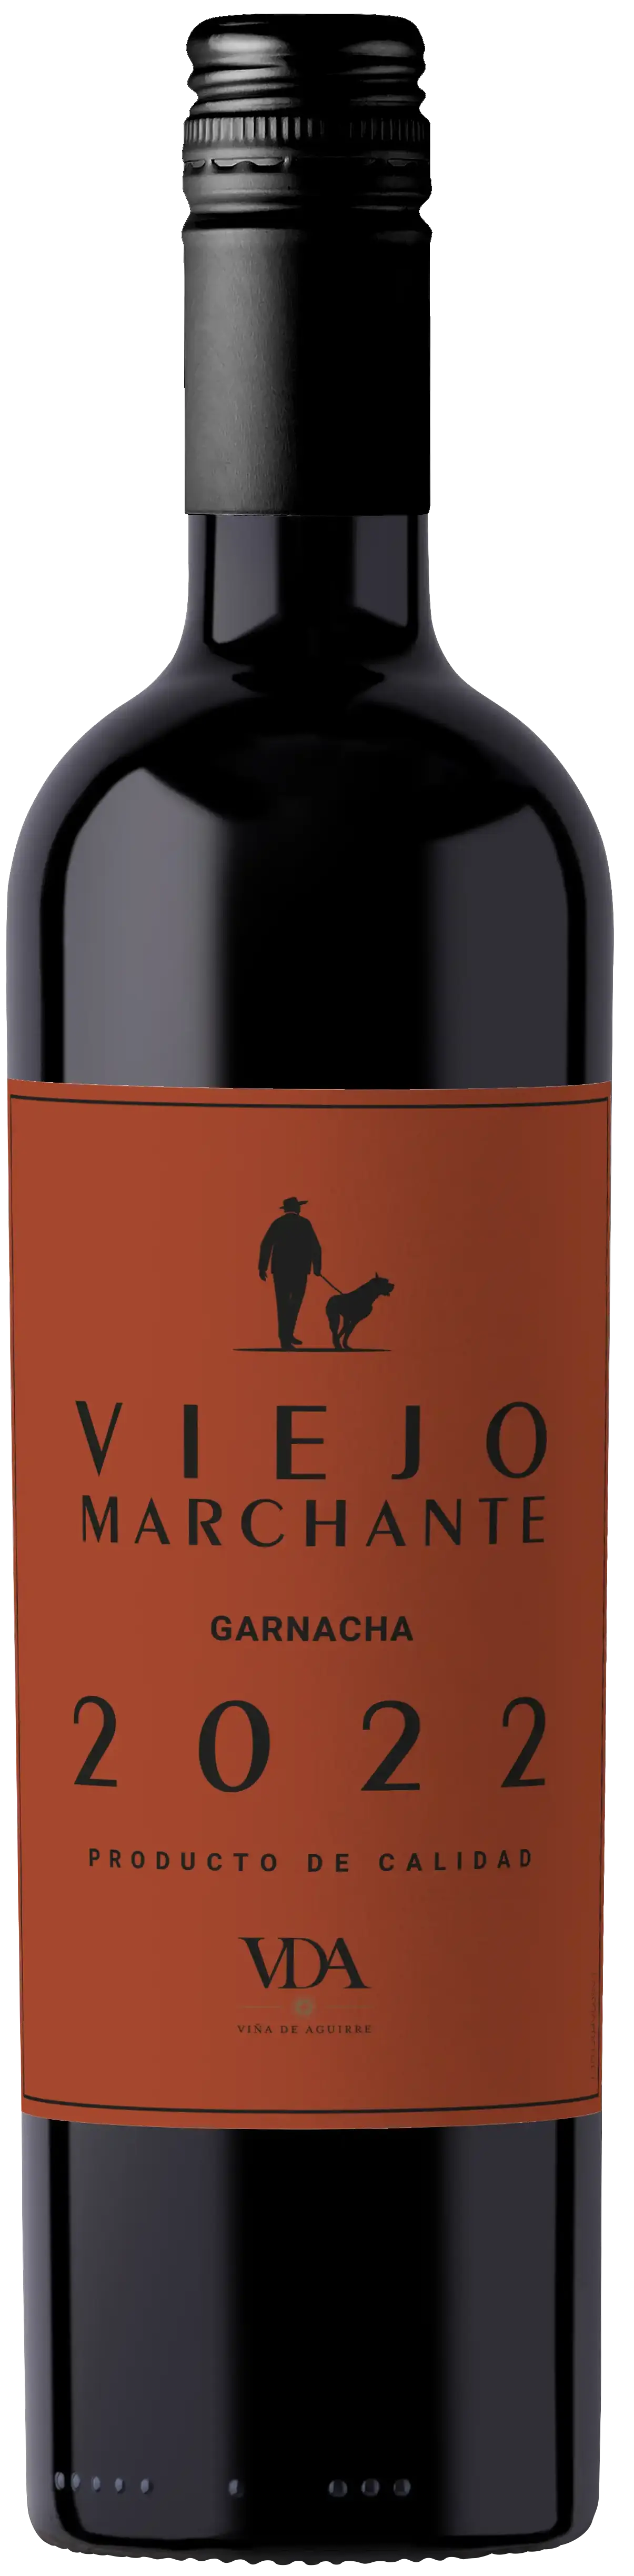 Viejo Marchante Garnacha (Вино Вьехо Марчанте Гарнача) Агирре